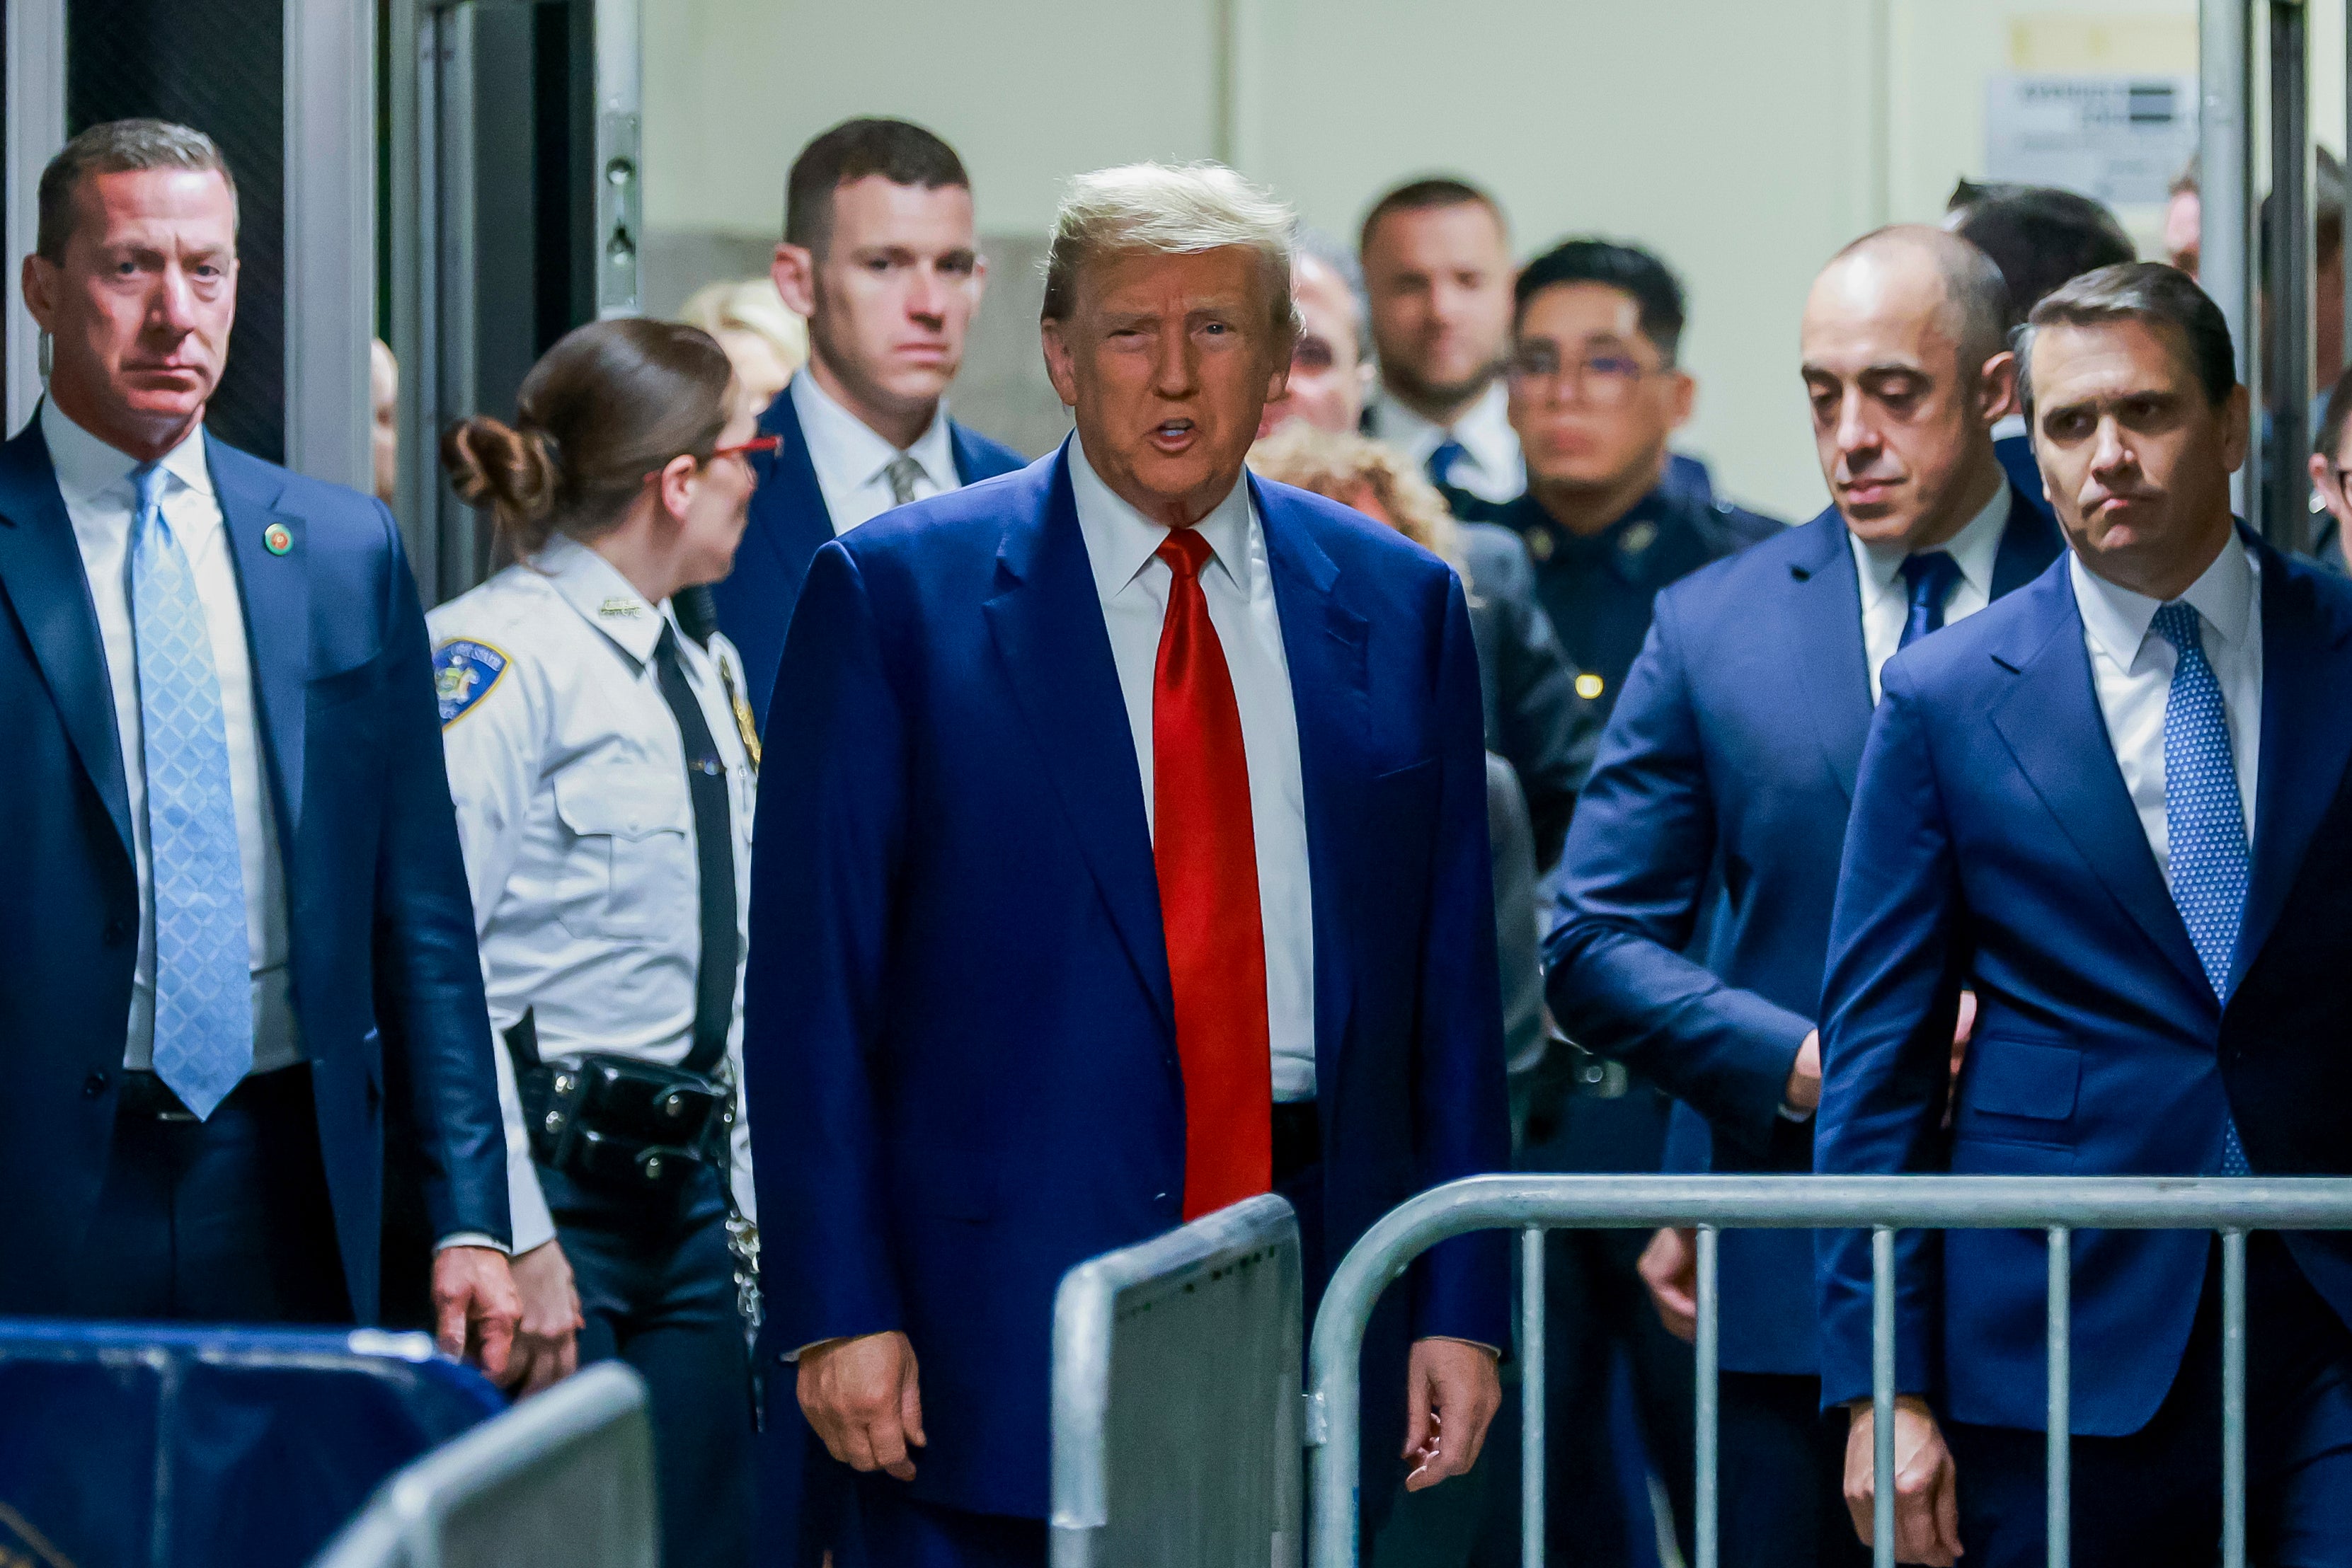 Former president Donald Trump arrives at New York Criminal Court on Monday